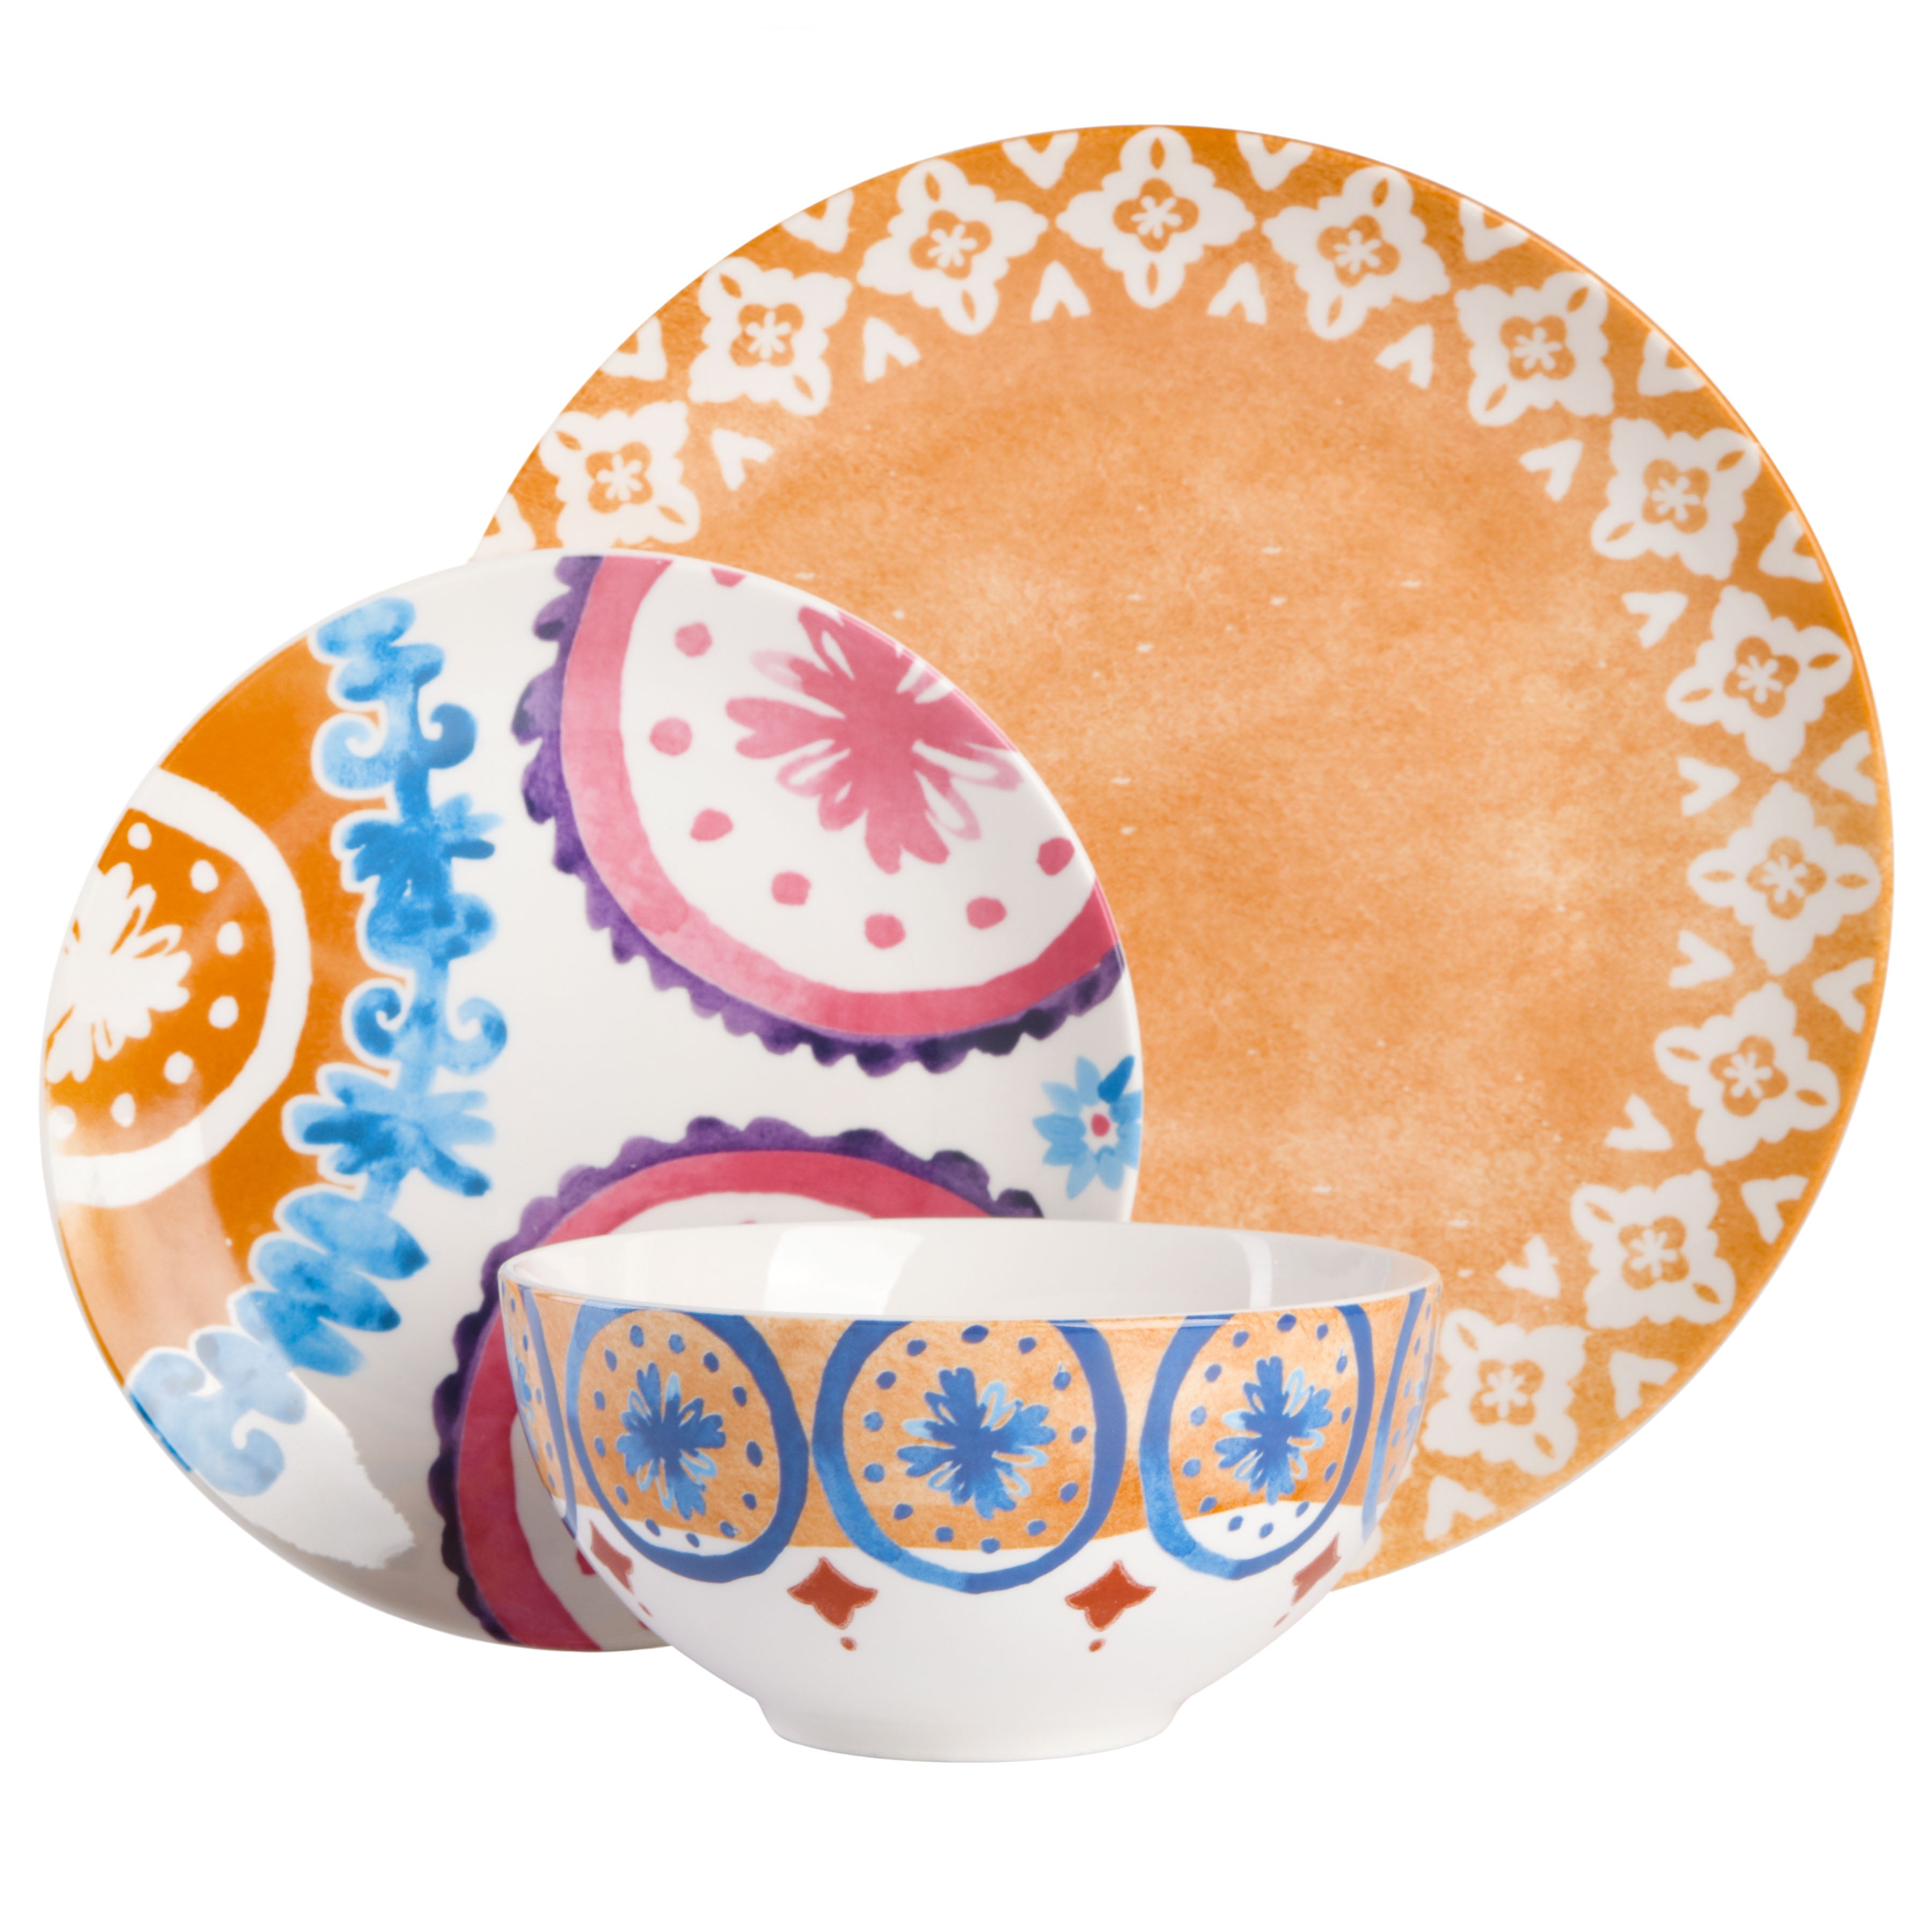 Spice by Tia Mowry Savory Saffron 18-Piece Porcelain Dinnerware Set